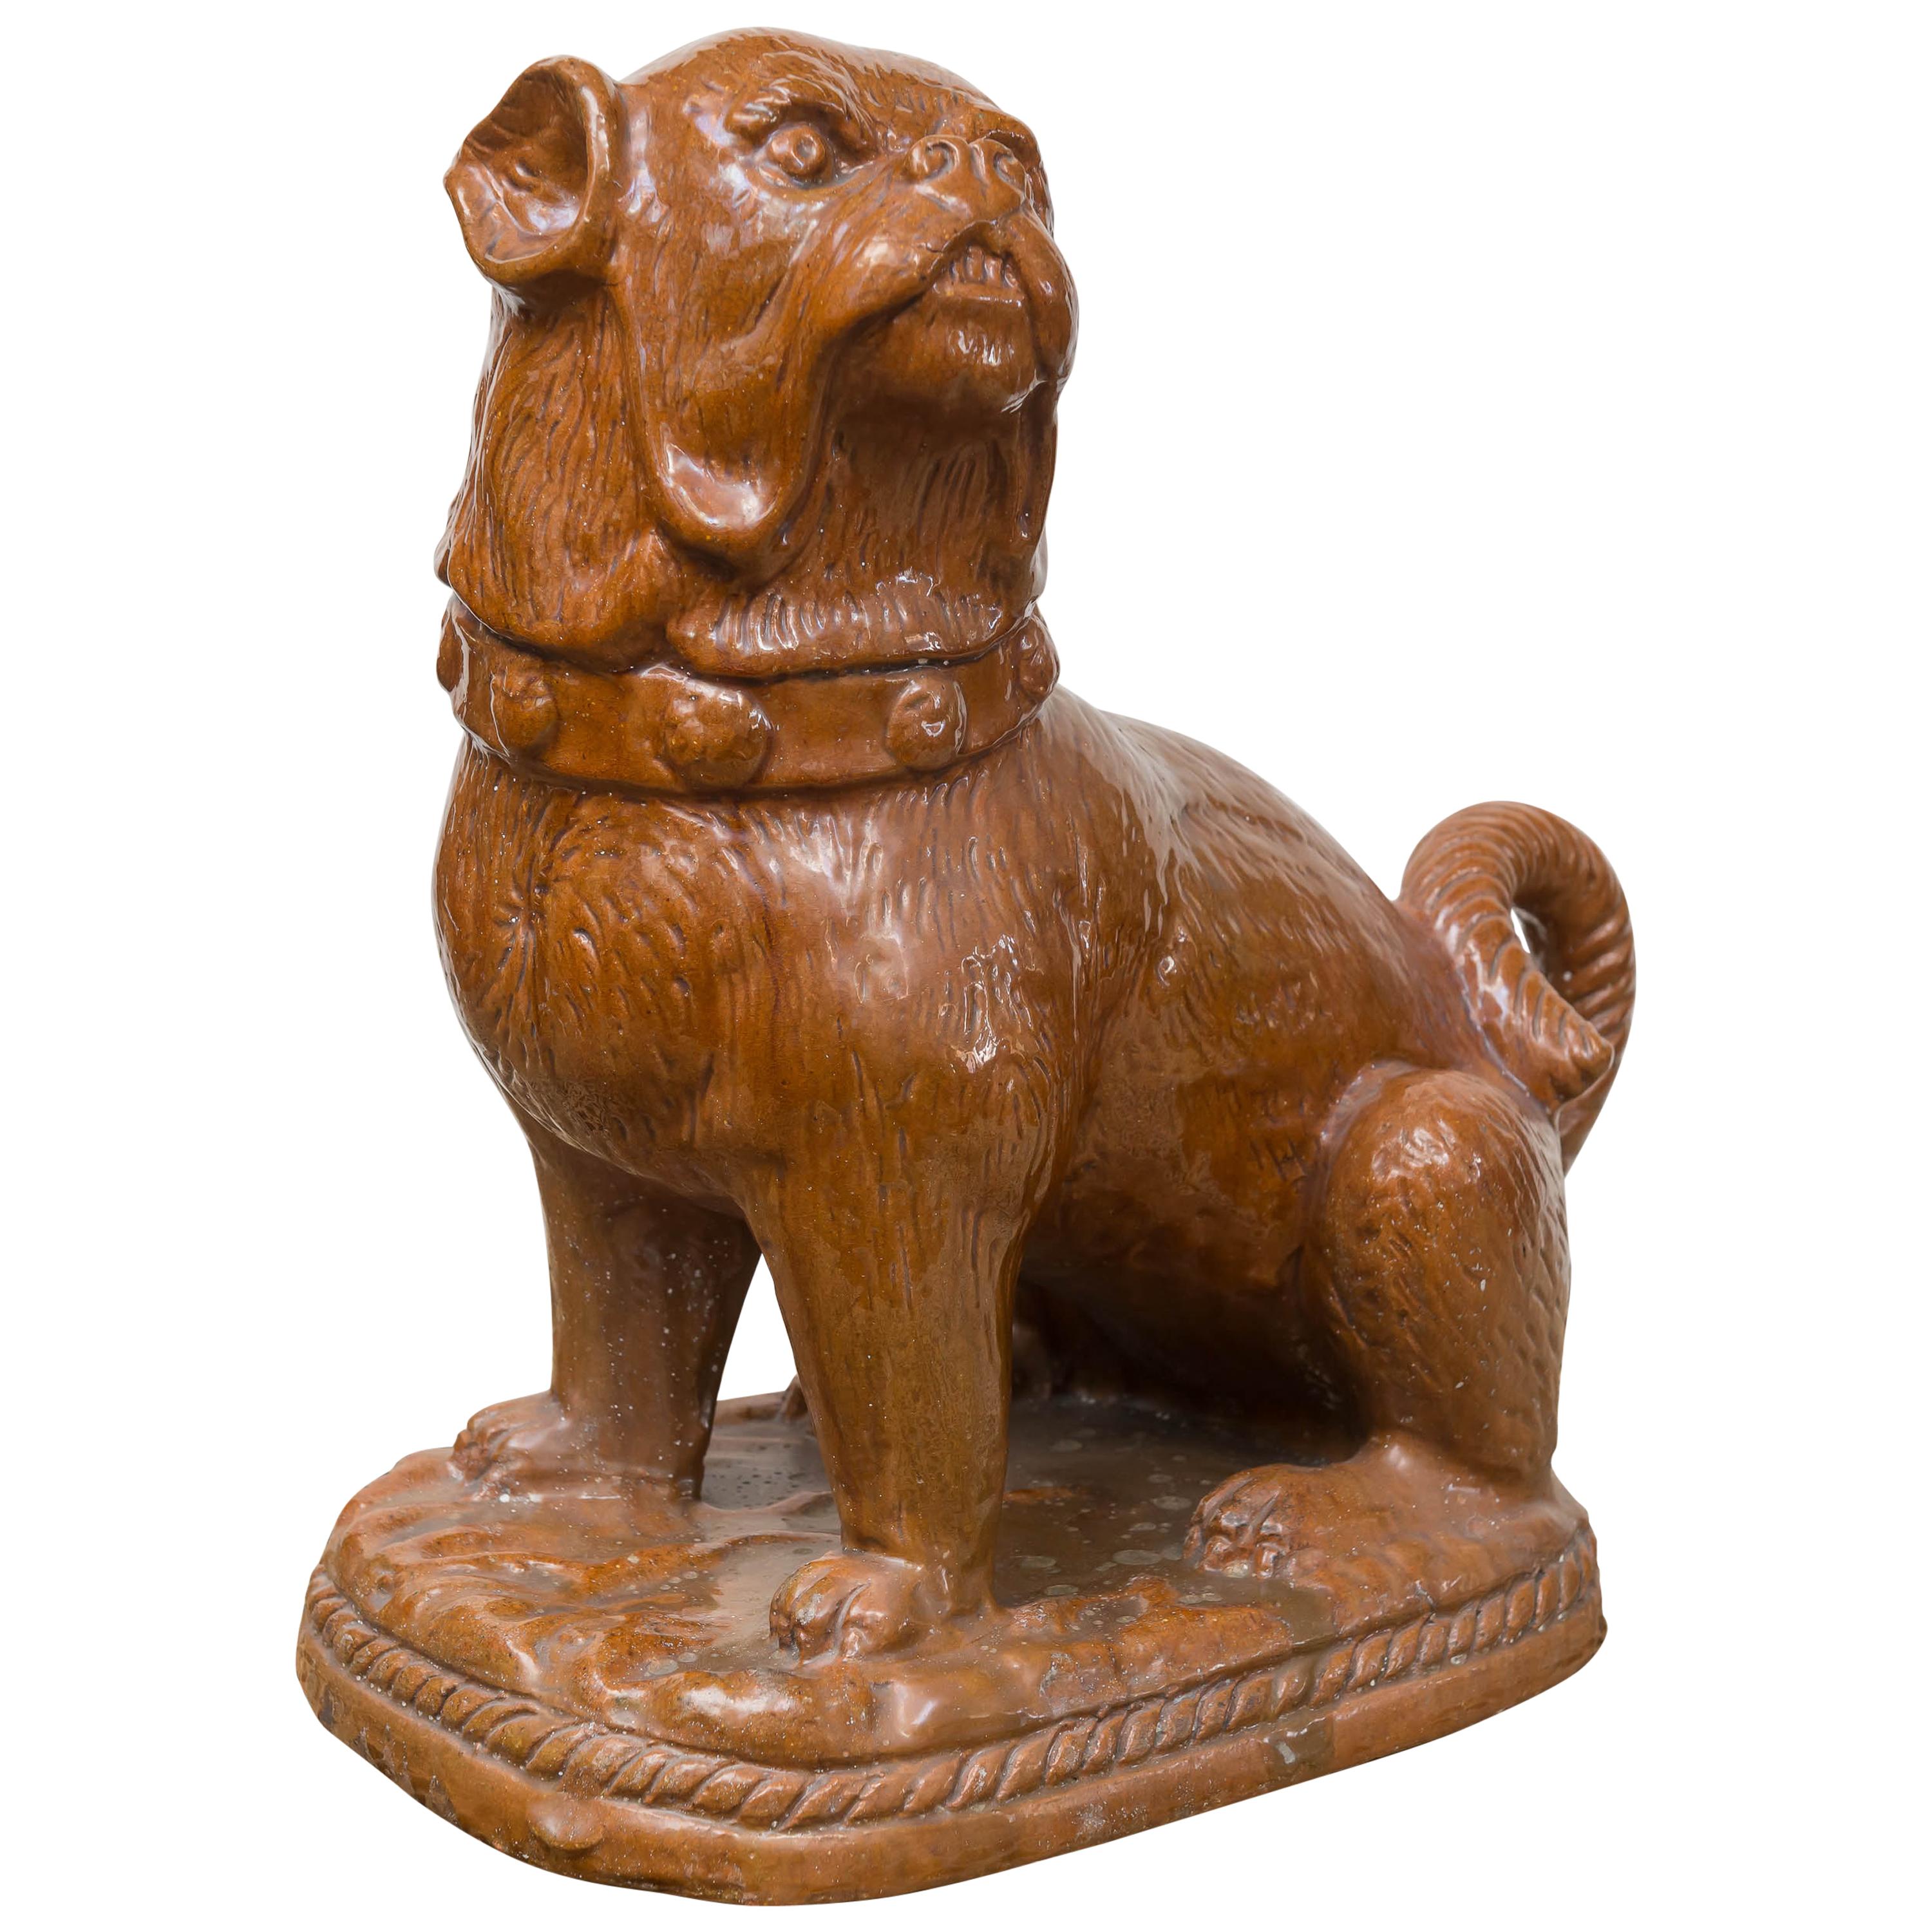 Late 19th Century German Pug Dog, Heavy Terracotta with Brown Carmel Color Glaze